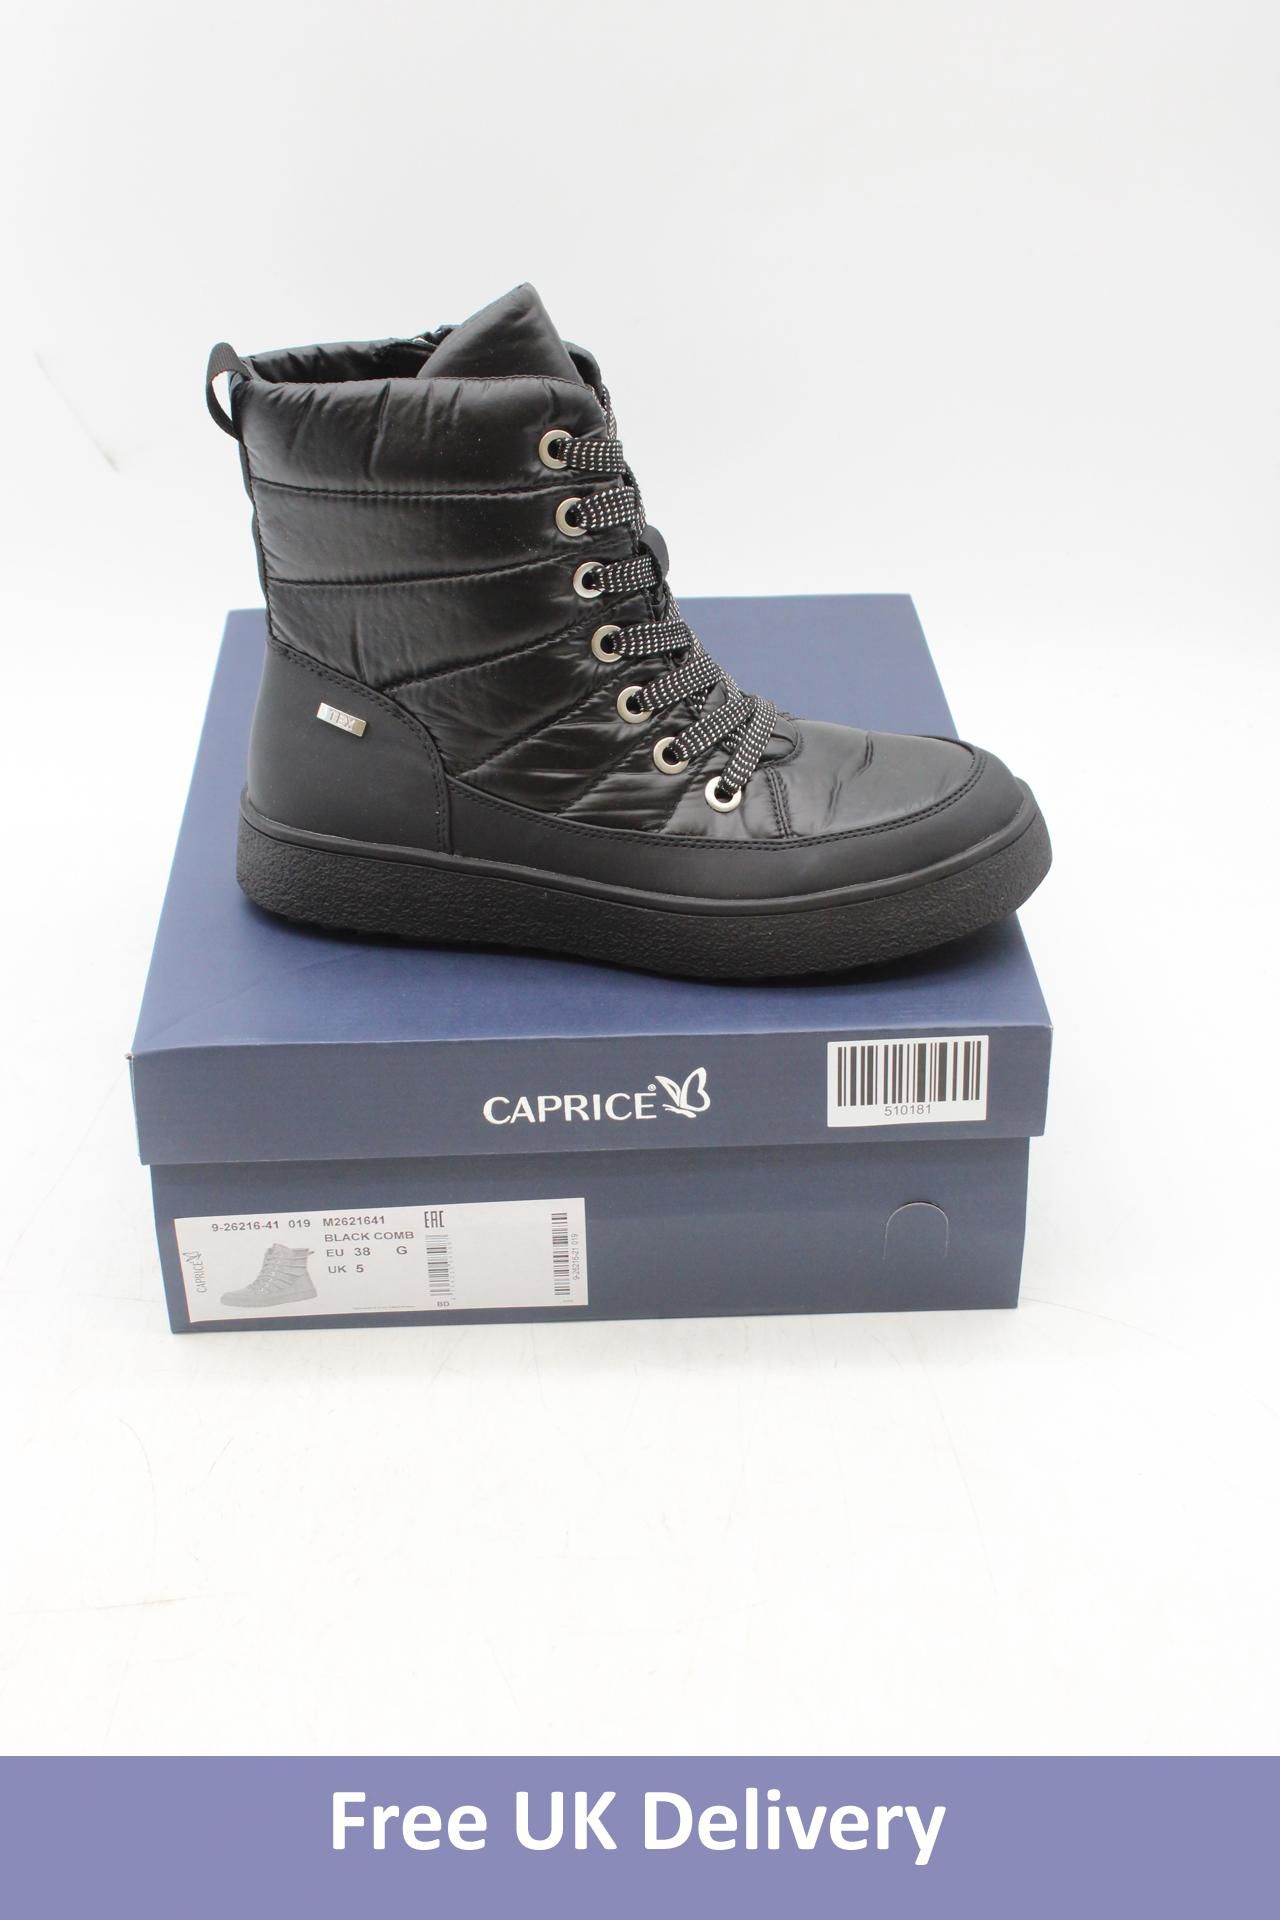 Caprice Women's Snow Boots, Black, UK 3.5